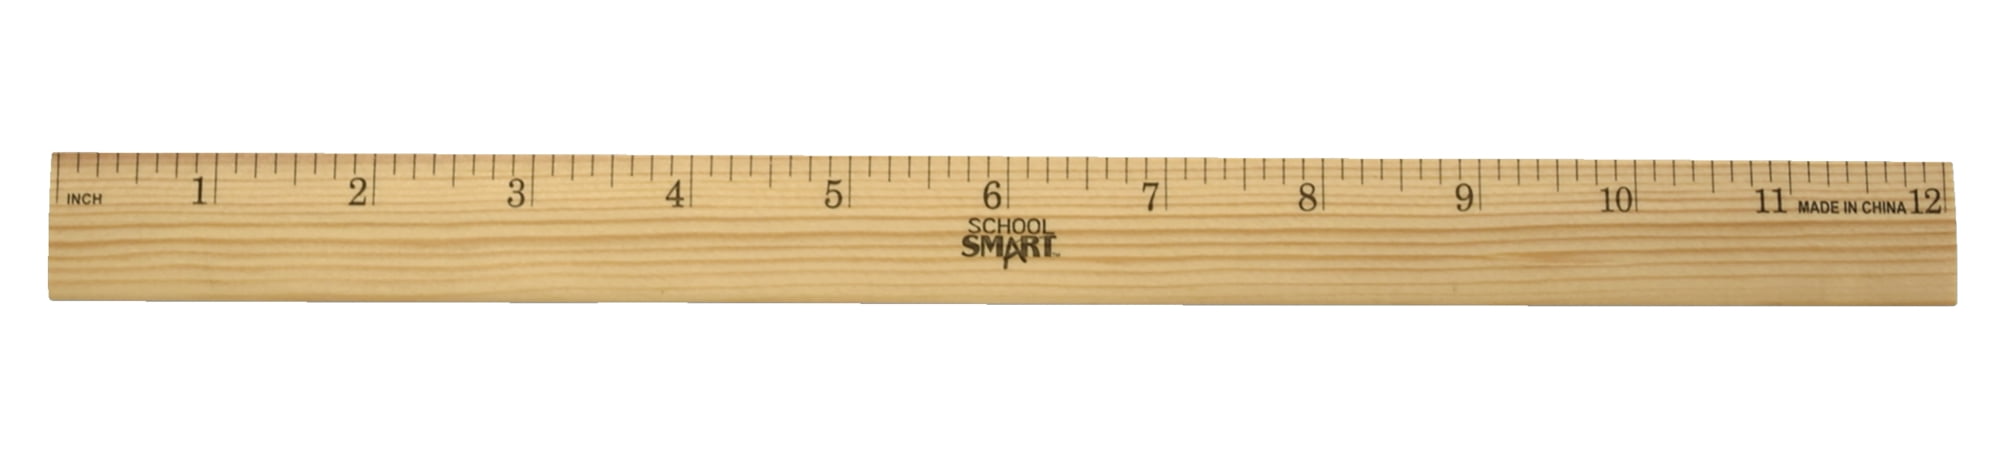 School Wood Ruler 